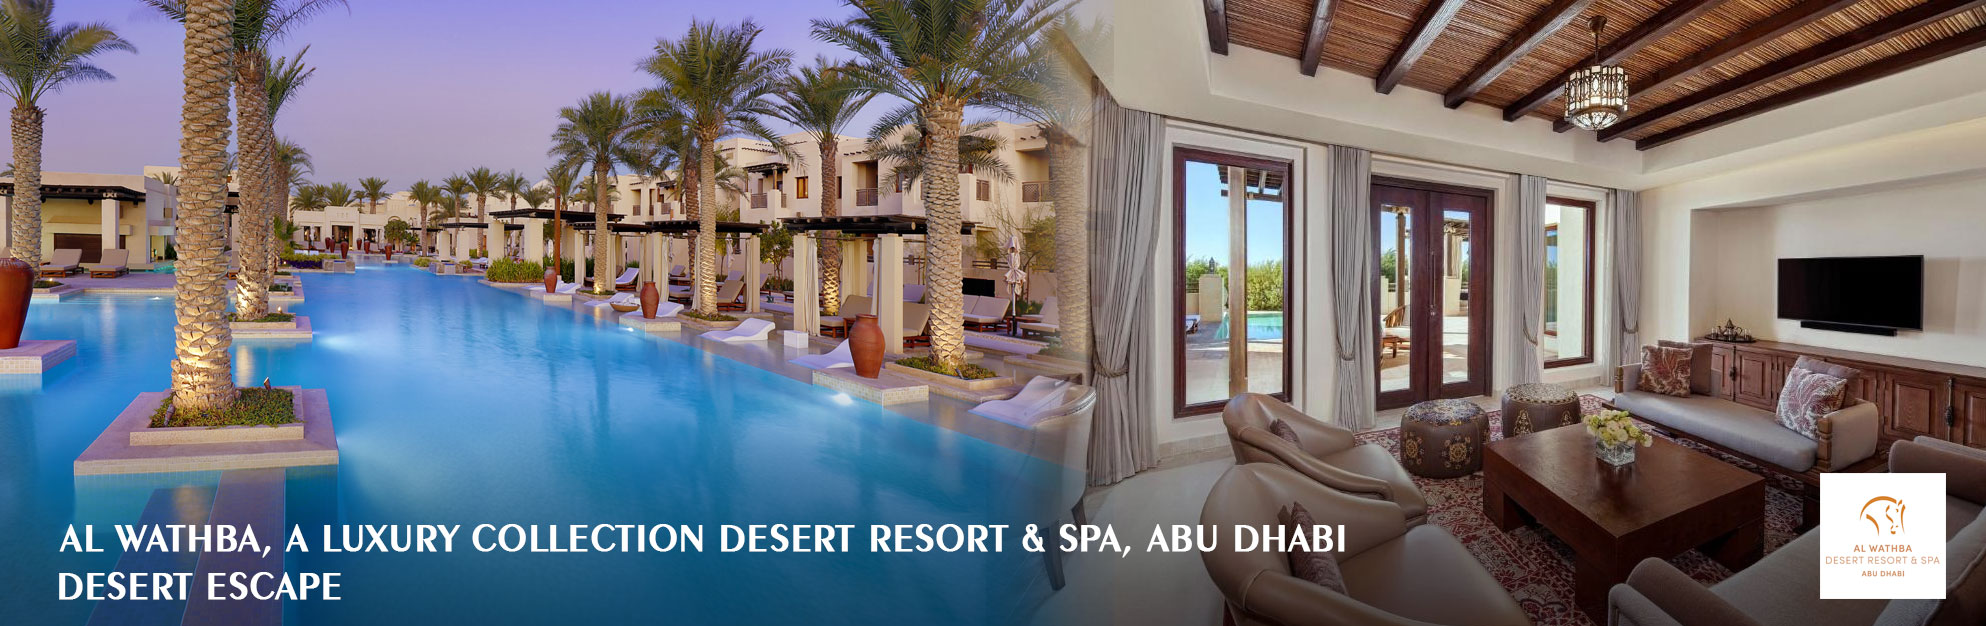 2Al-Wathba,-a-Luxury-Collection-Desert-Resort-&-Spa,-Abu-Dhabi